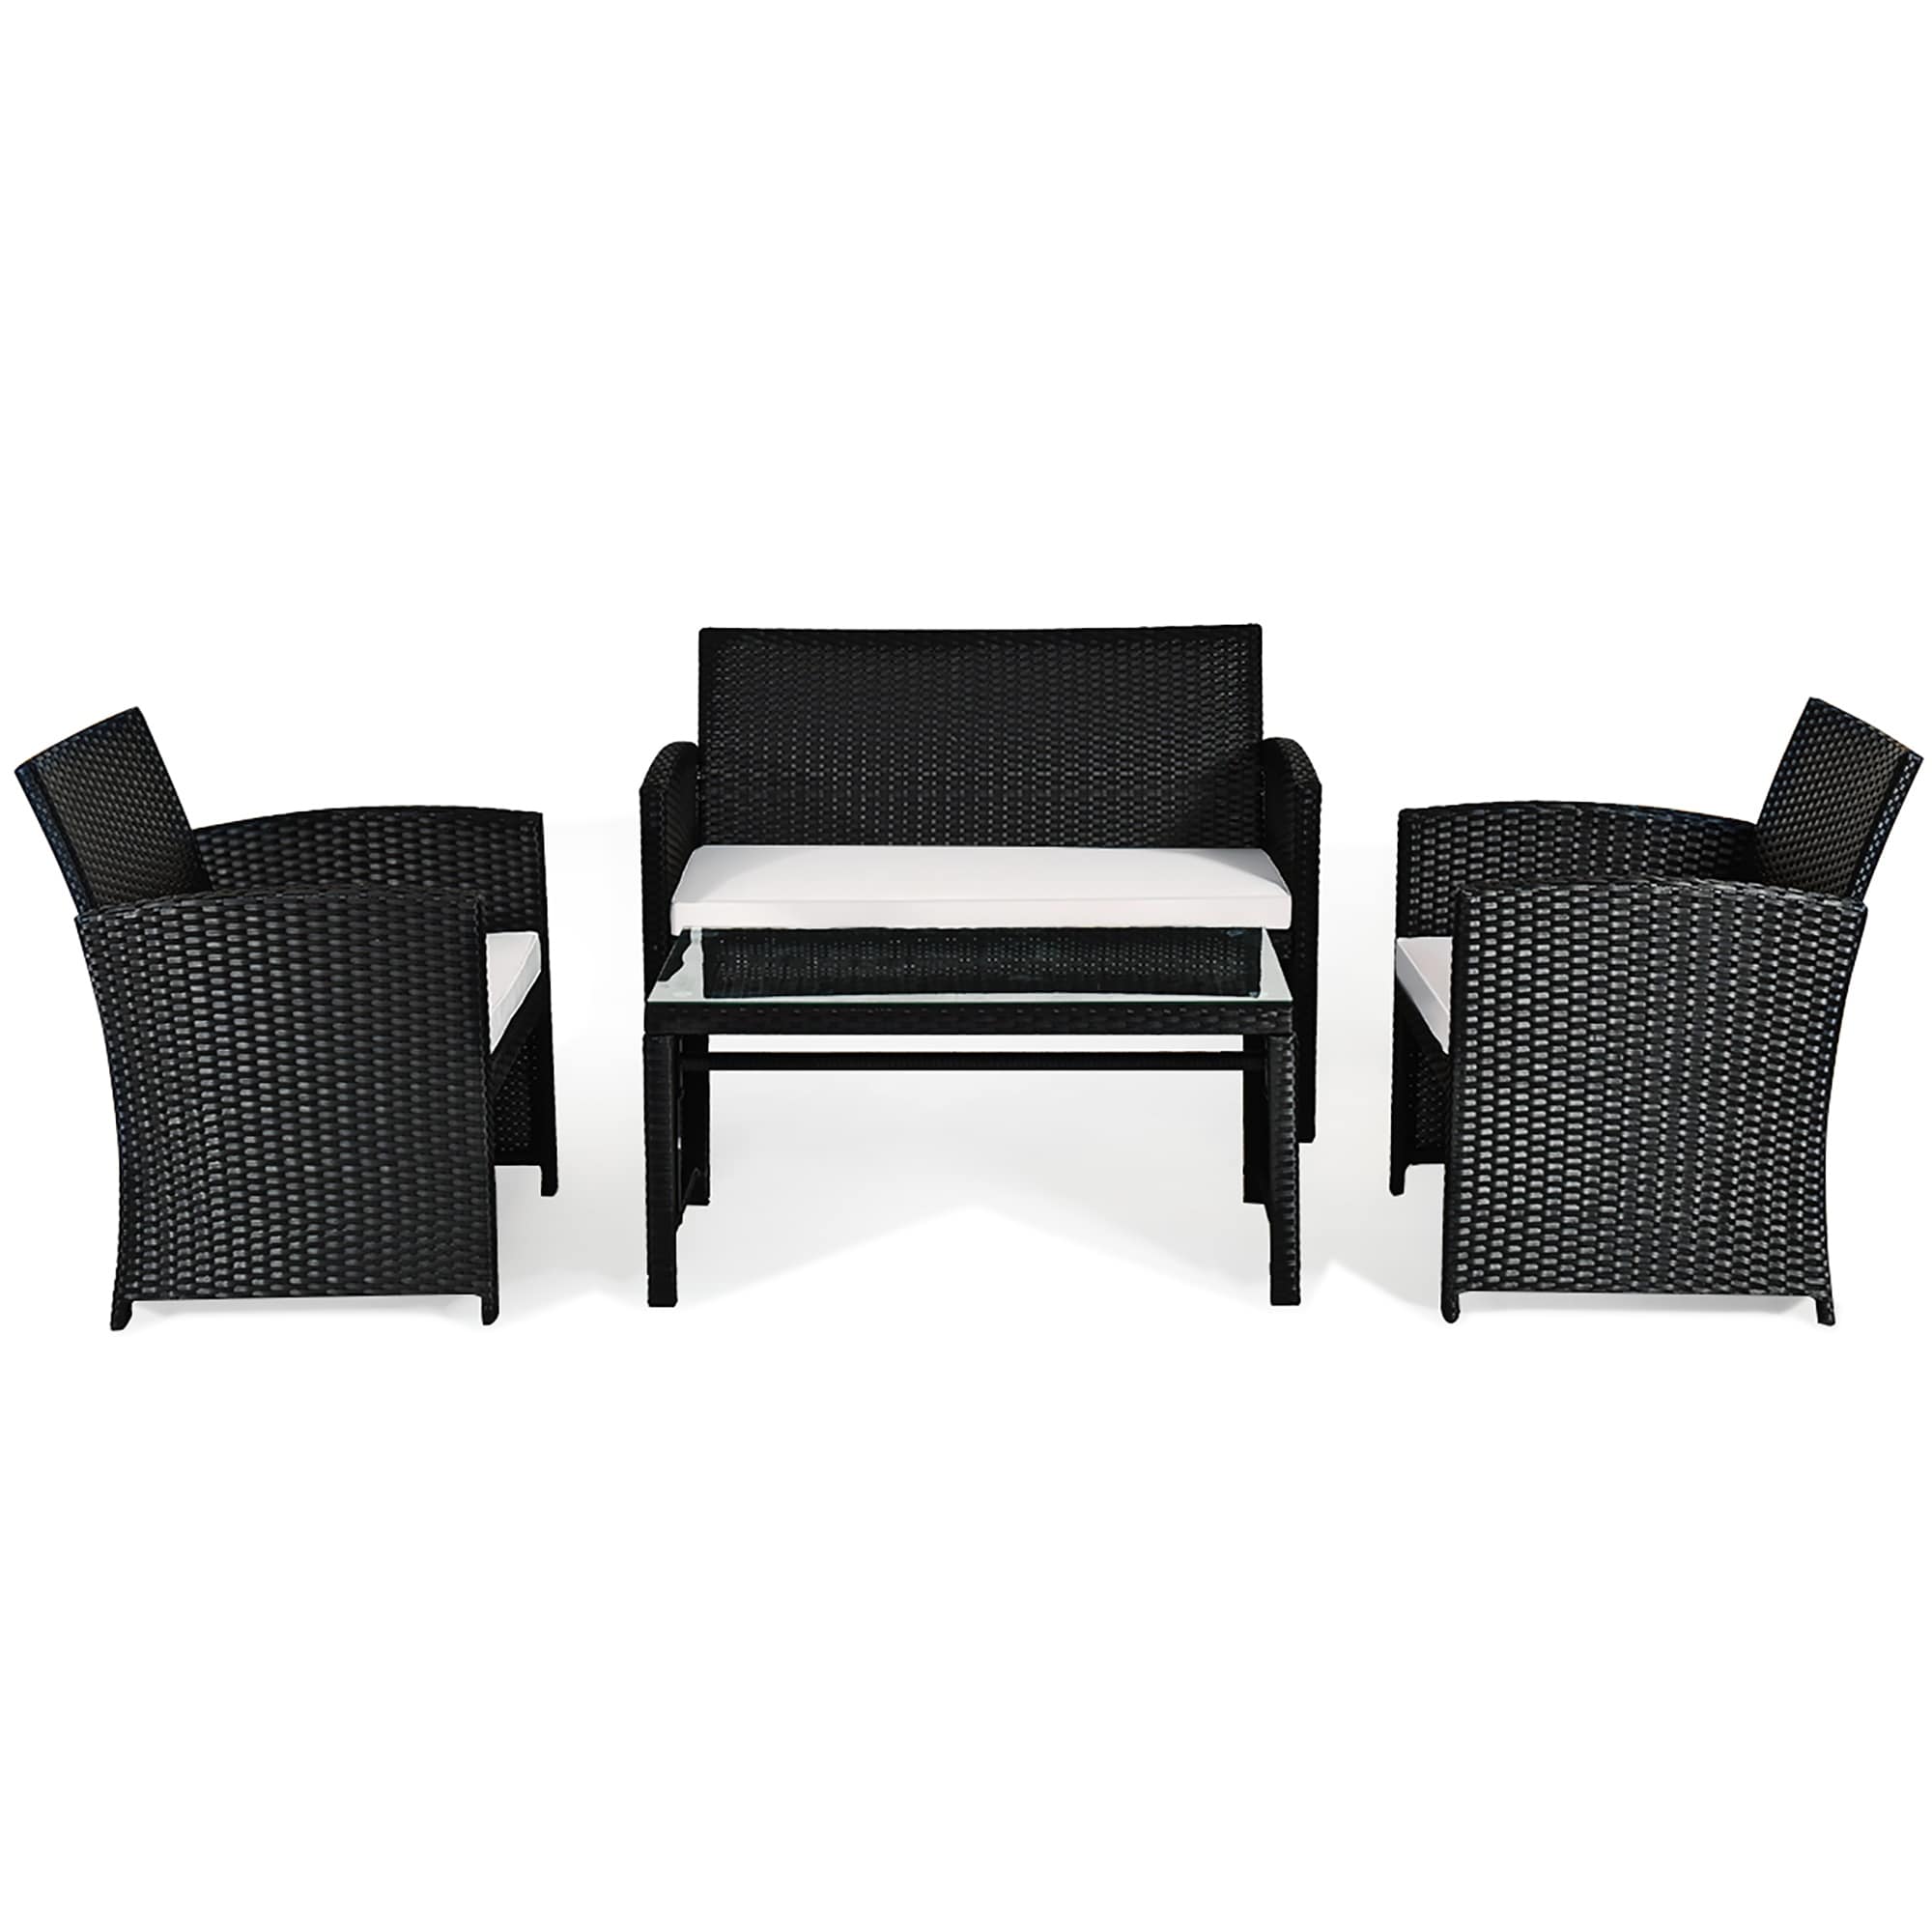 4pcs Wicker Patio Conversation Set Outdoor Rattan Sofa Set With Table